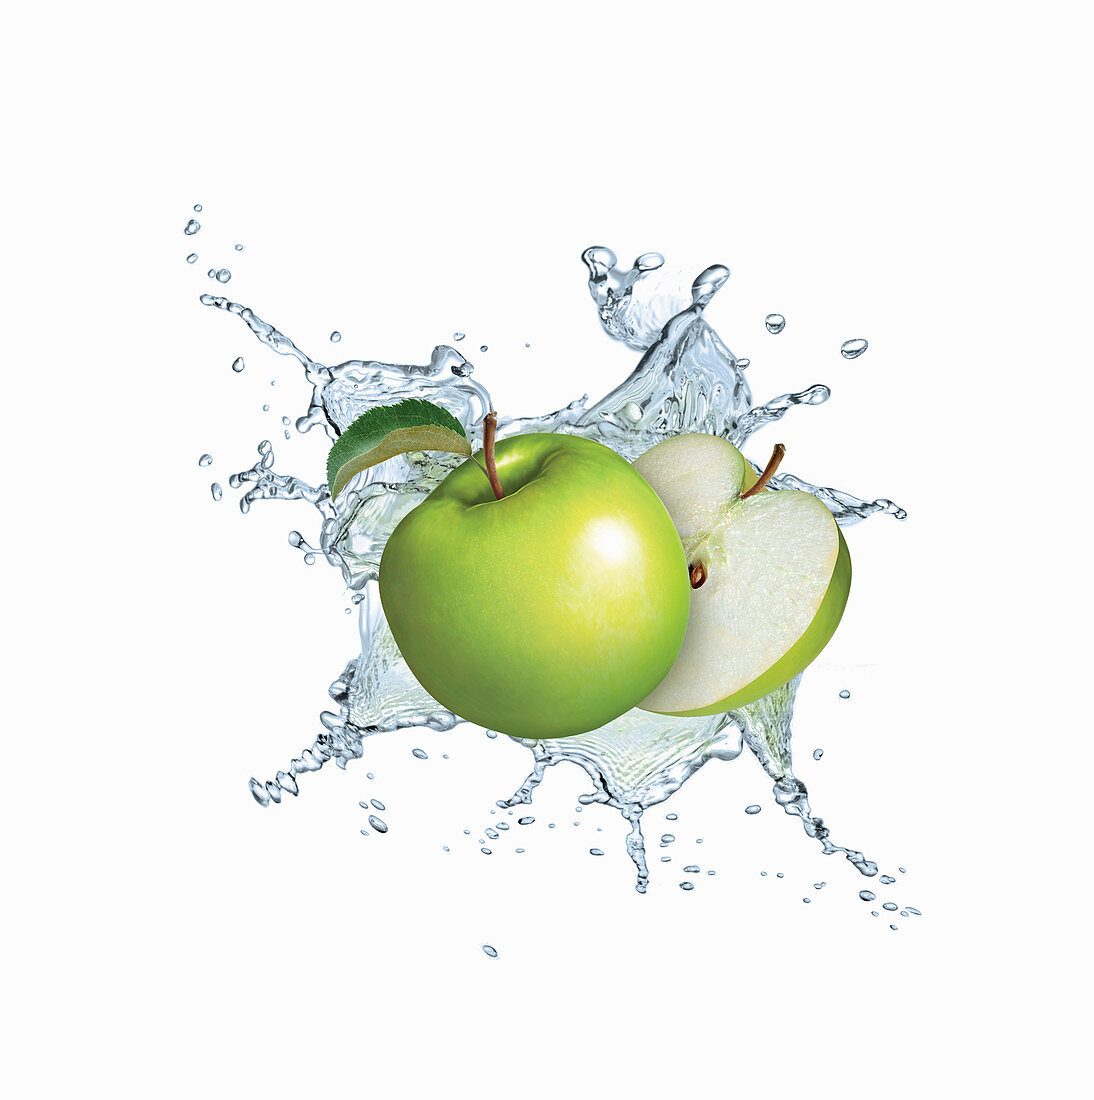 Water splashing around green apples, illustration